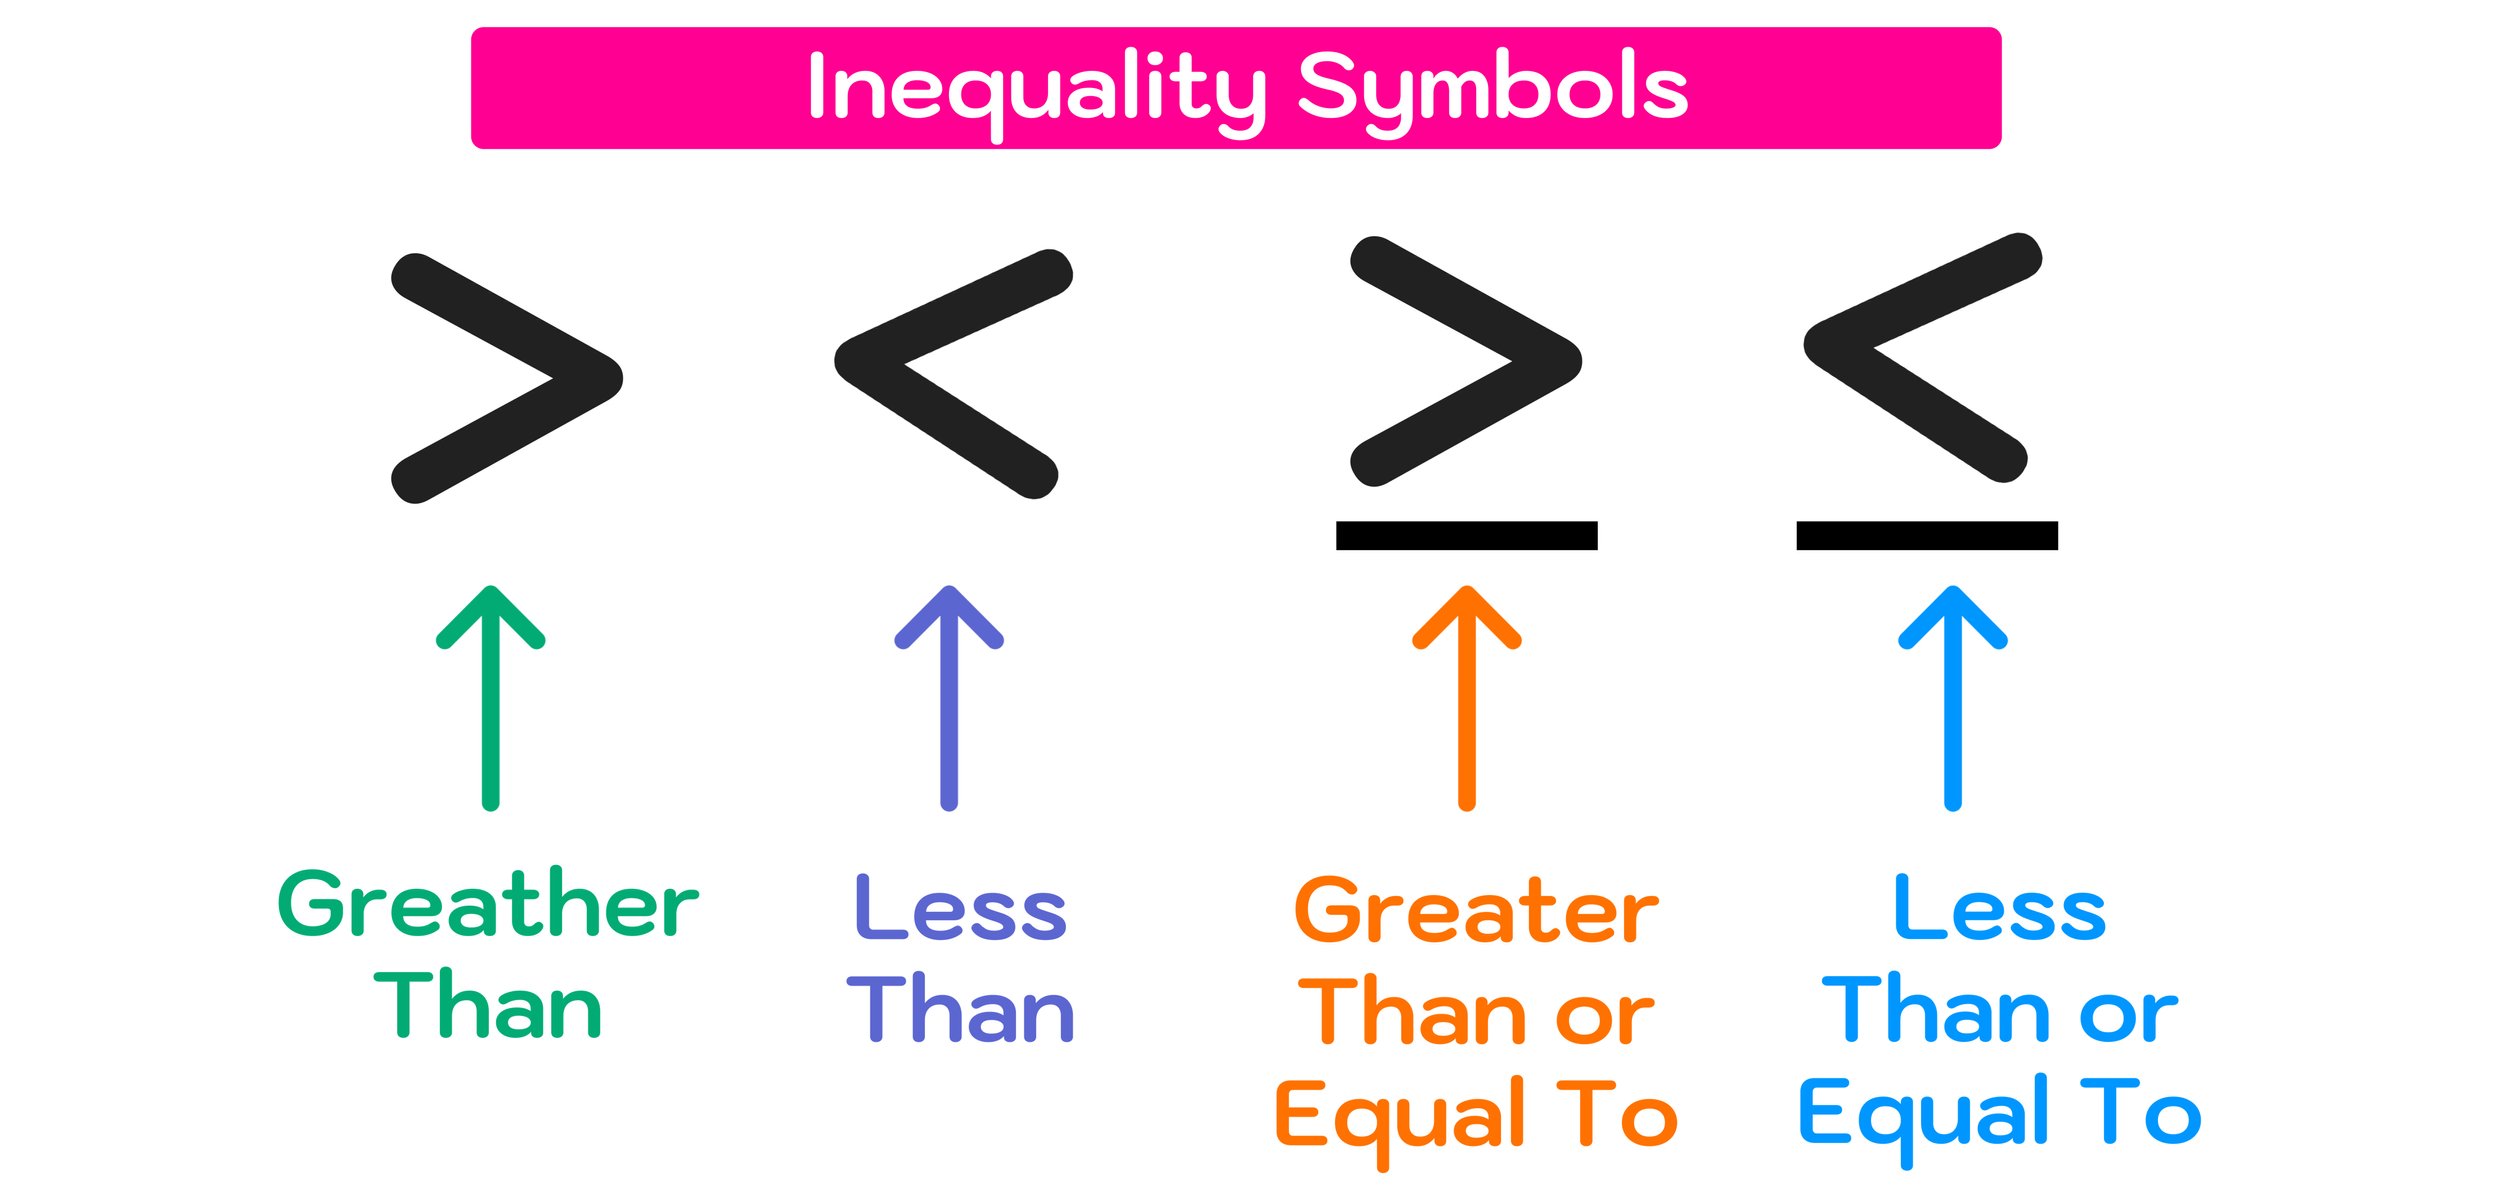 inequalities problem solving